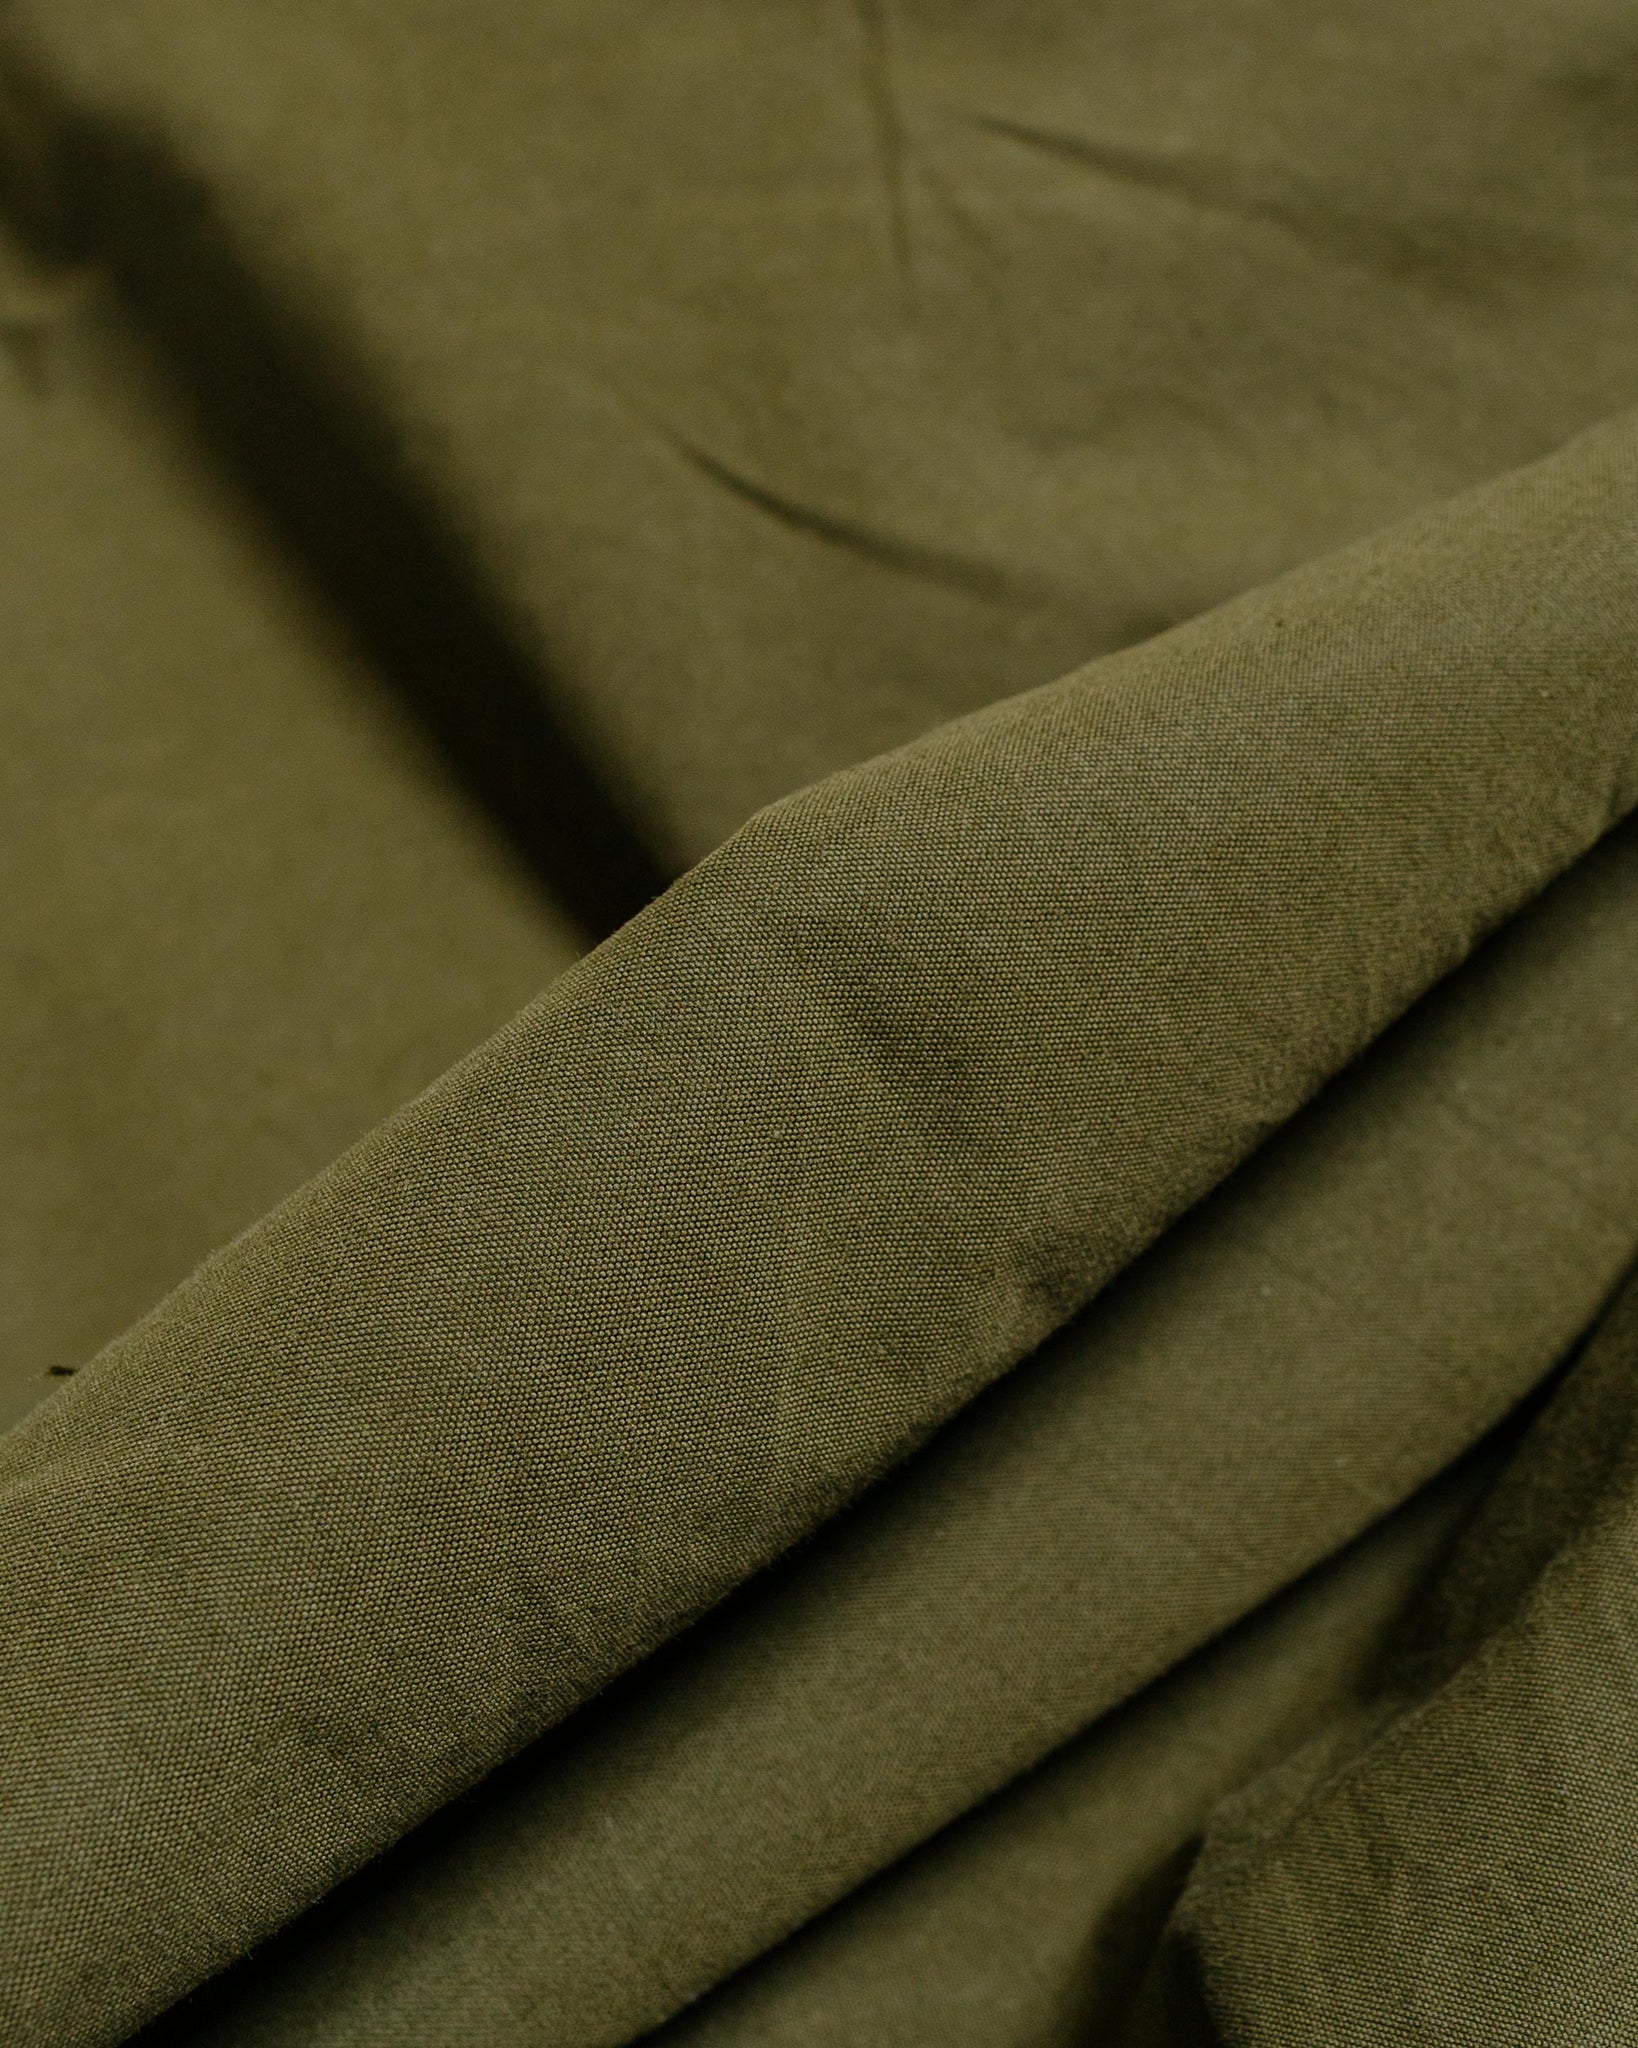 The Corona Utility FP023 M-51 Over Slacks Army NylonCotton Blocks Olive Green fabric